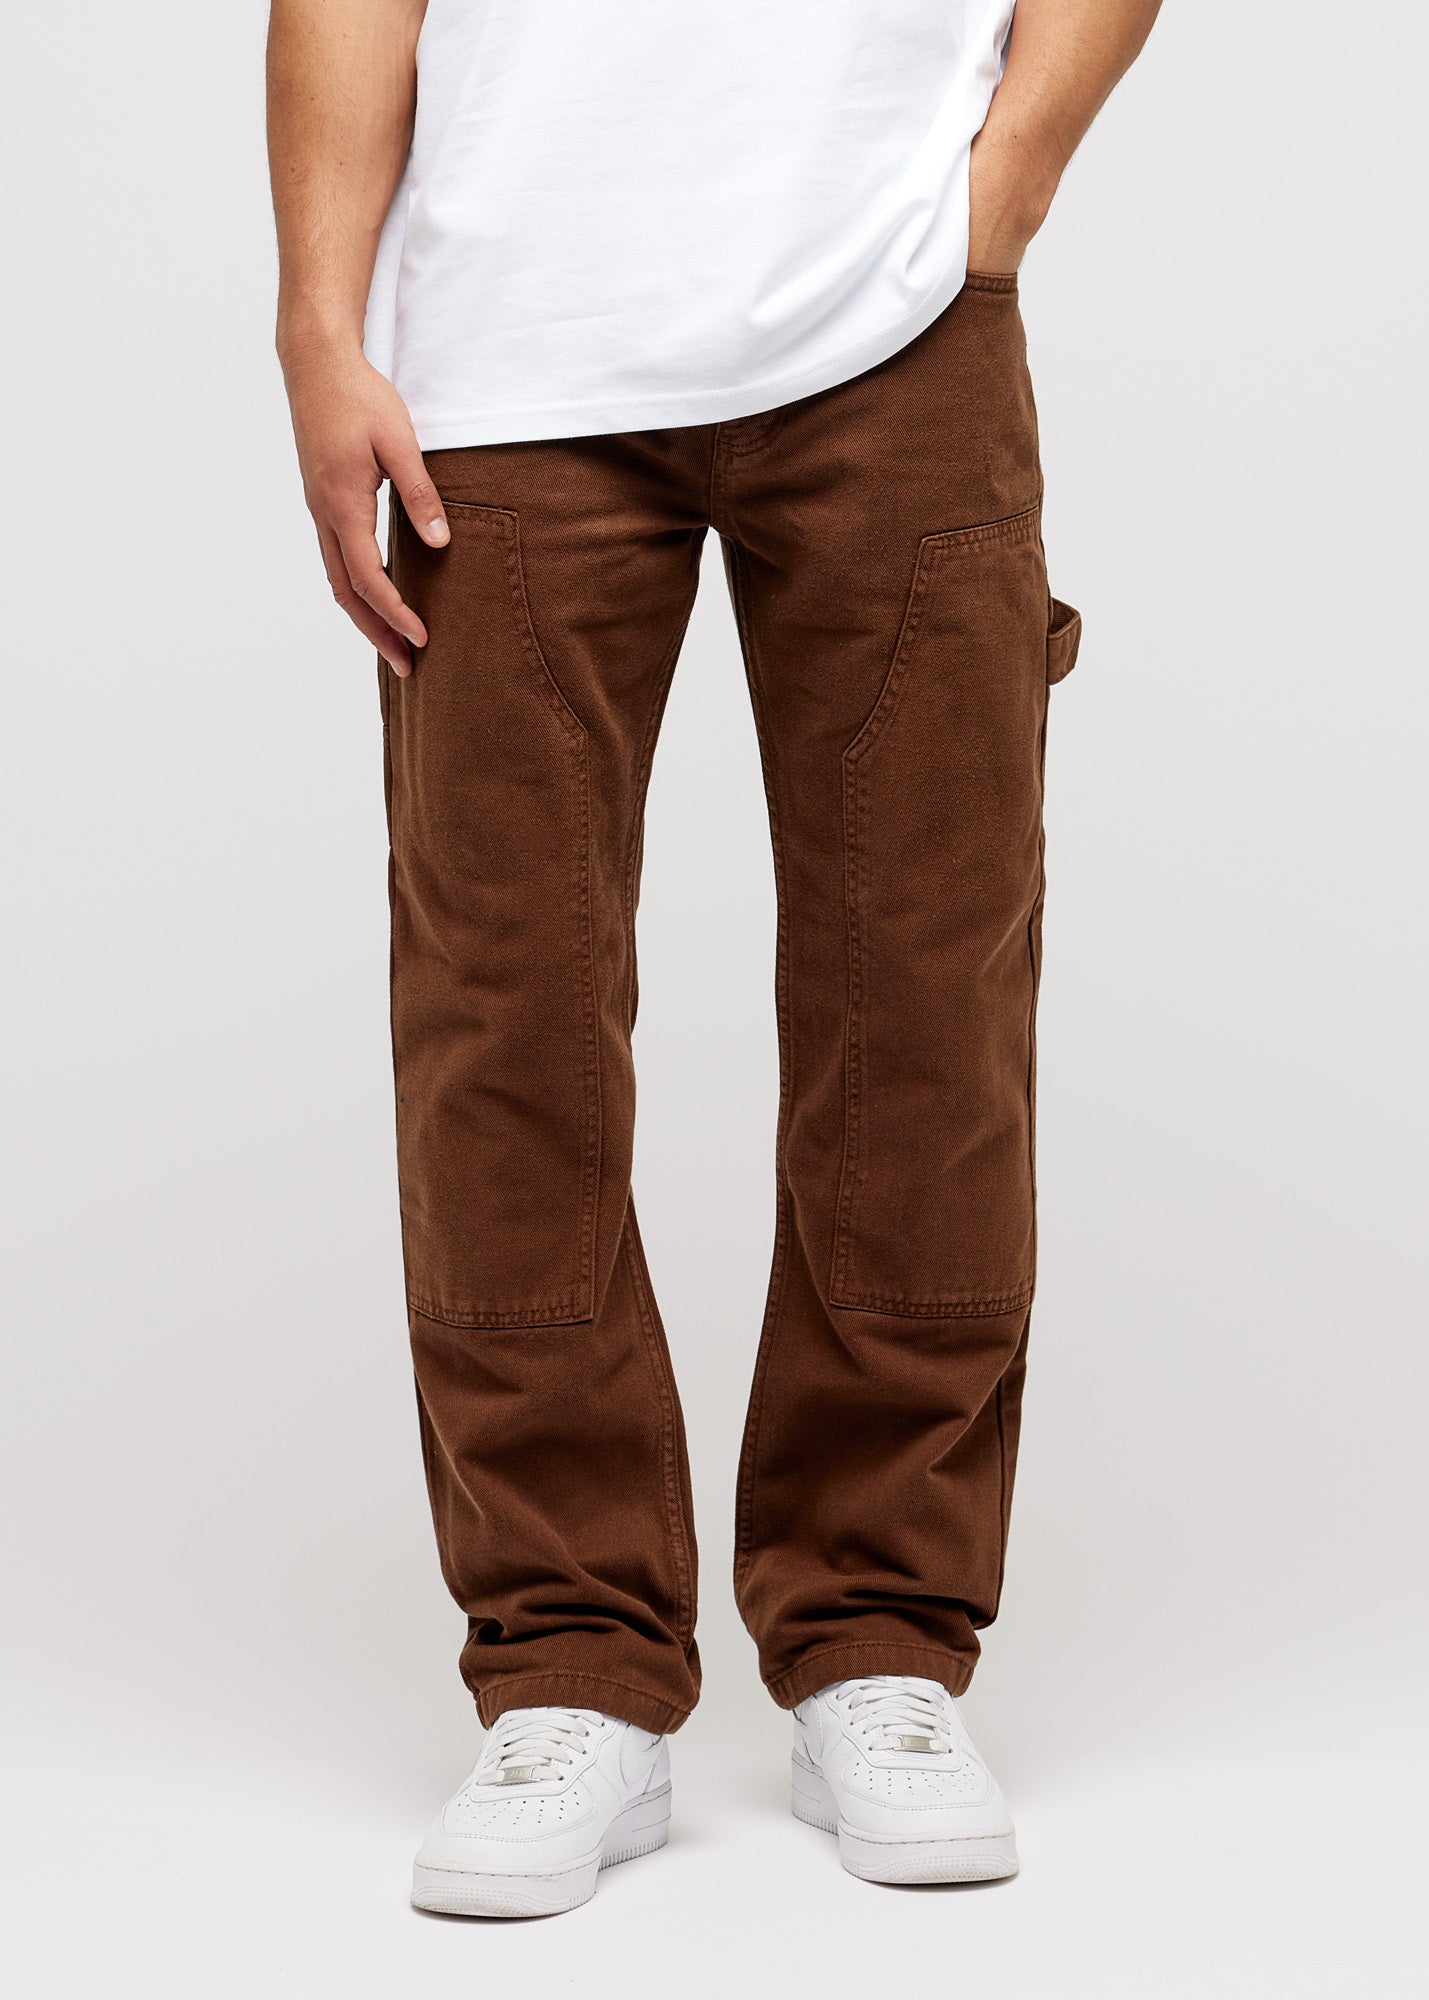 Guild pants - Trenkercord 400-00 FHB without impact work pants, carpenter  pants, | eBay